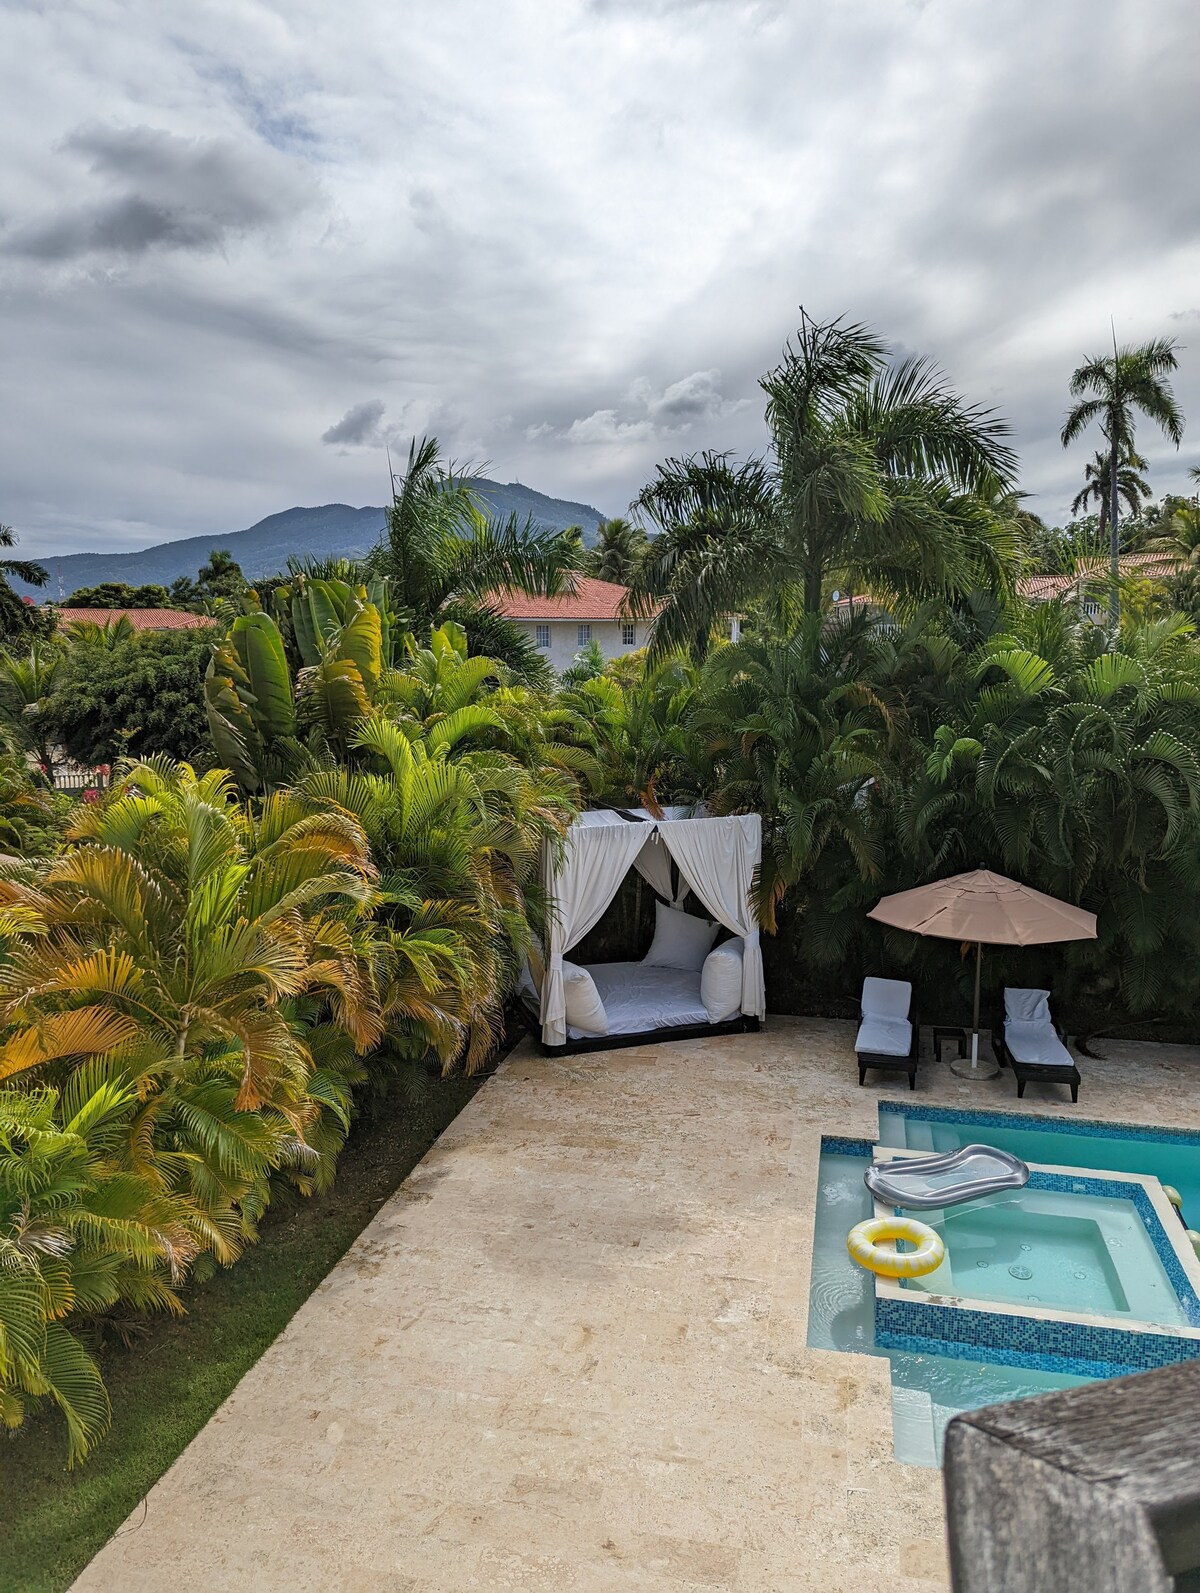 5-Star Luxury Villa, Pool, and Private Chef